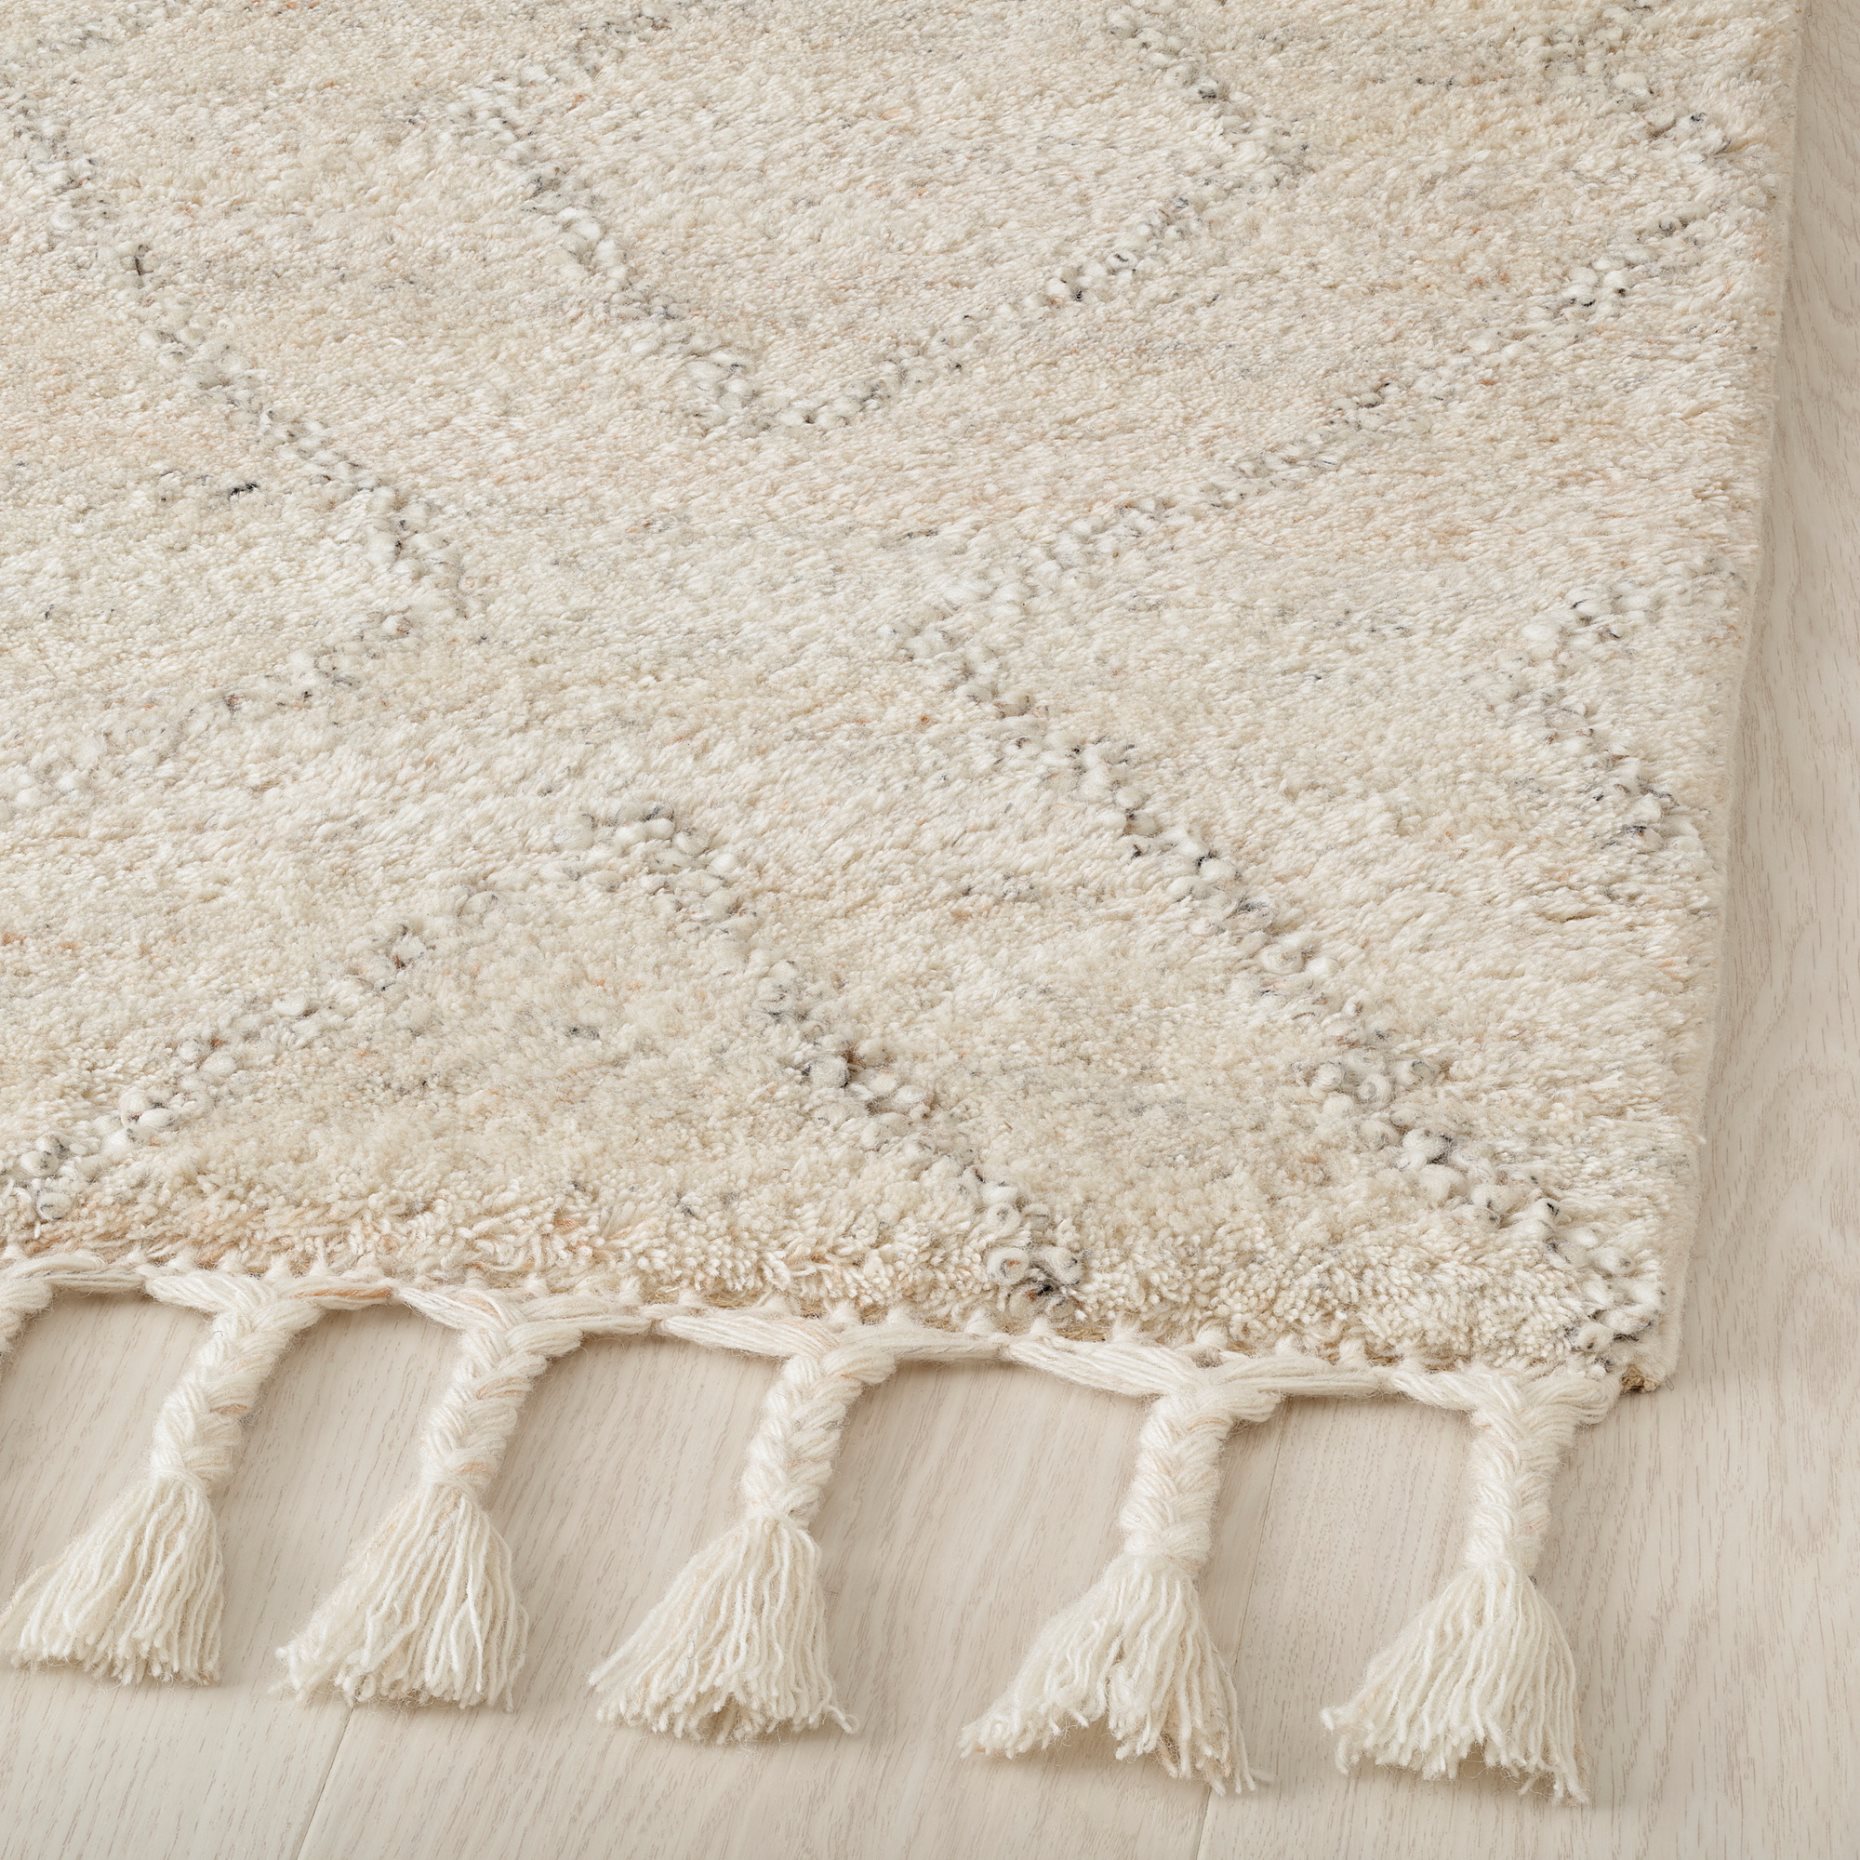 LENTATEL, rug high pile/handmade, 170x240 cm, 505.761.51